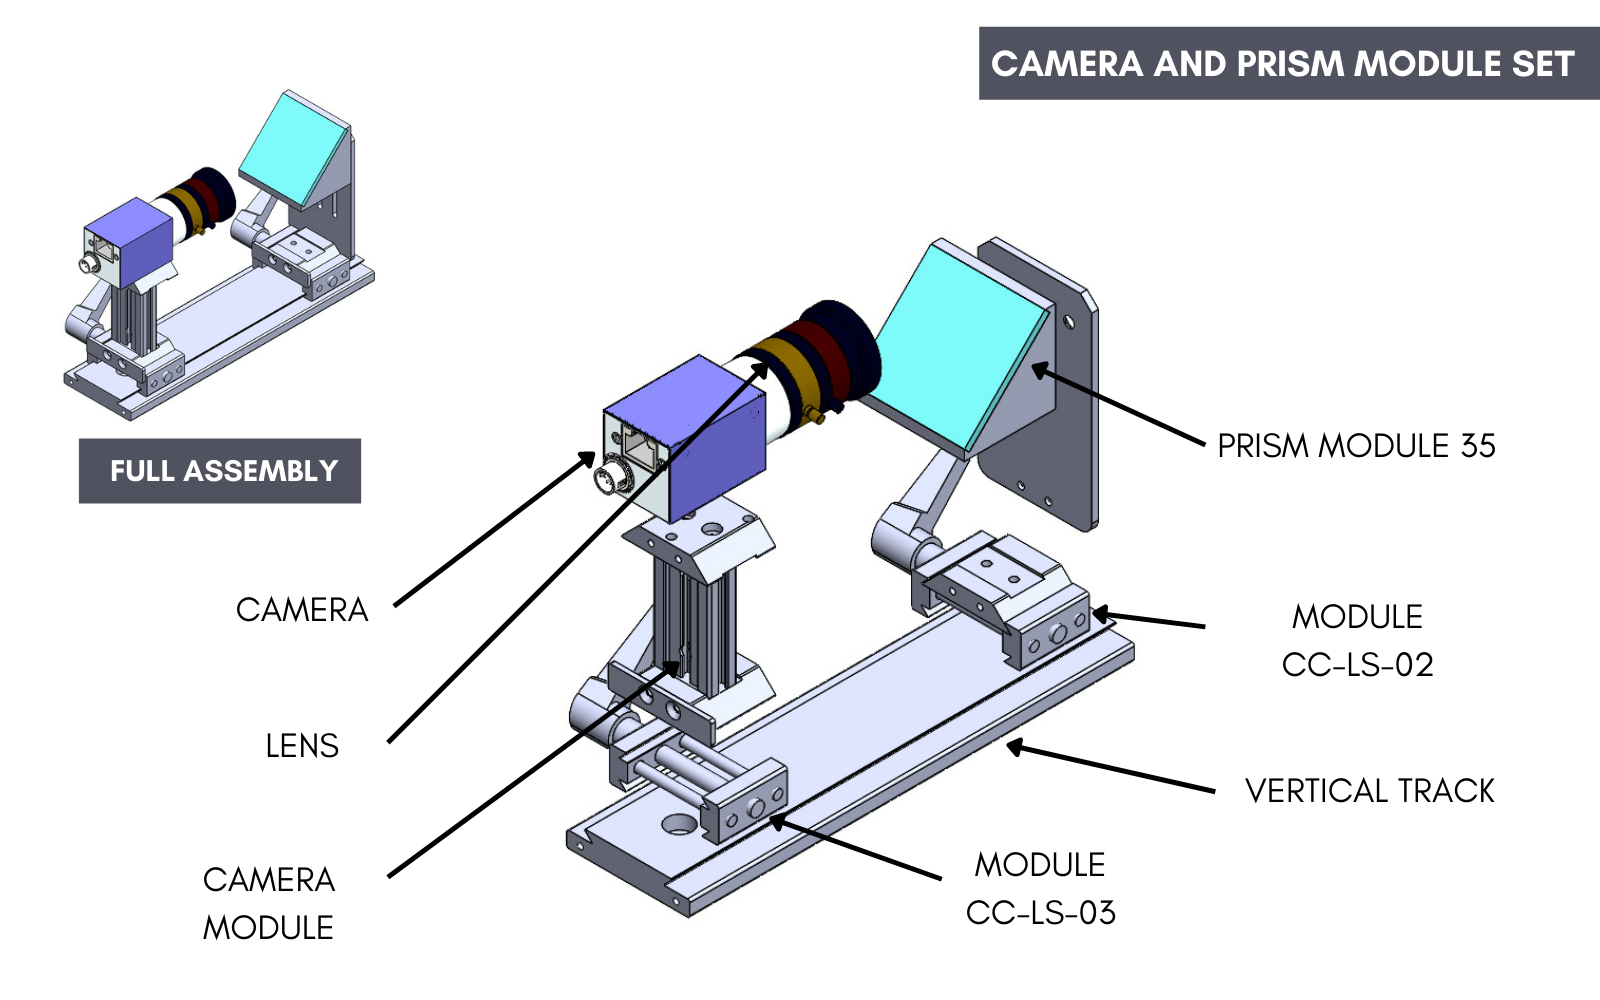 Camera and Illuminator Module Set